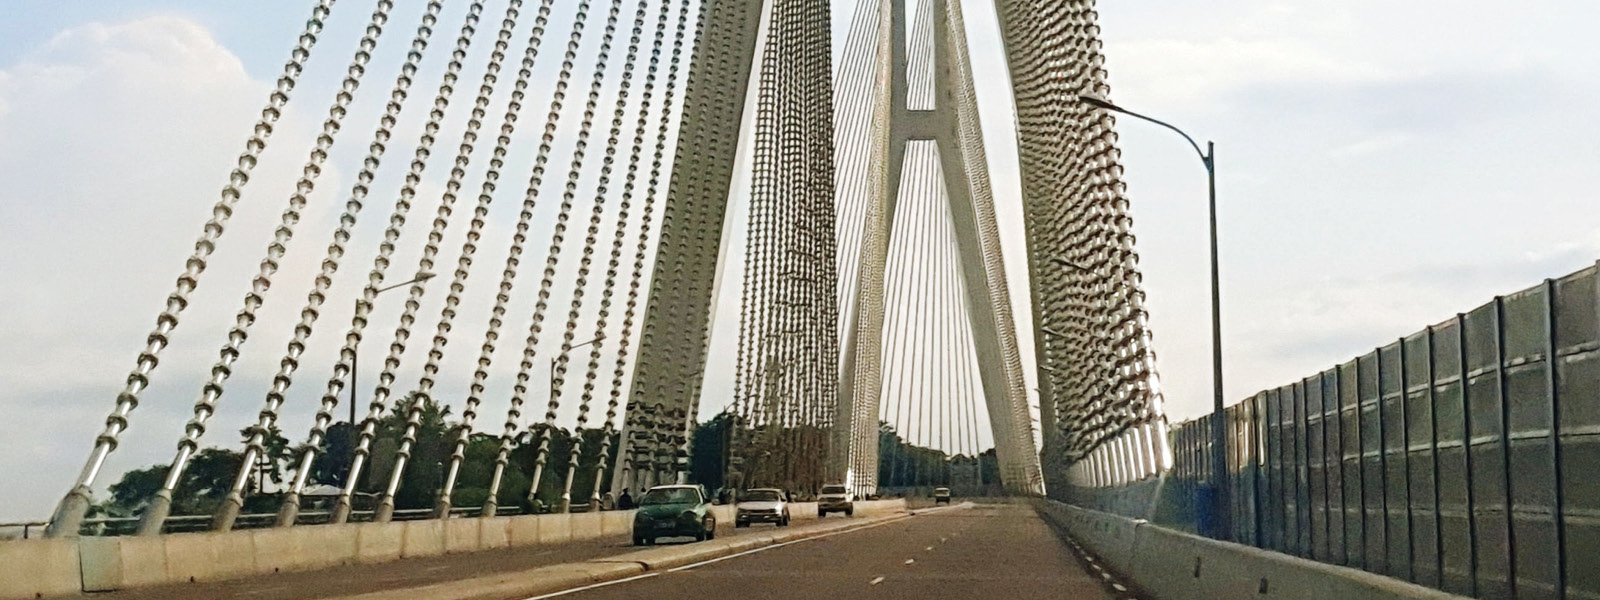 View Of Suspension Bridge Against Sky, Brazzaville, Democratic Republic Of Congo